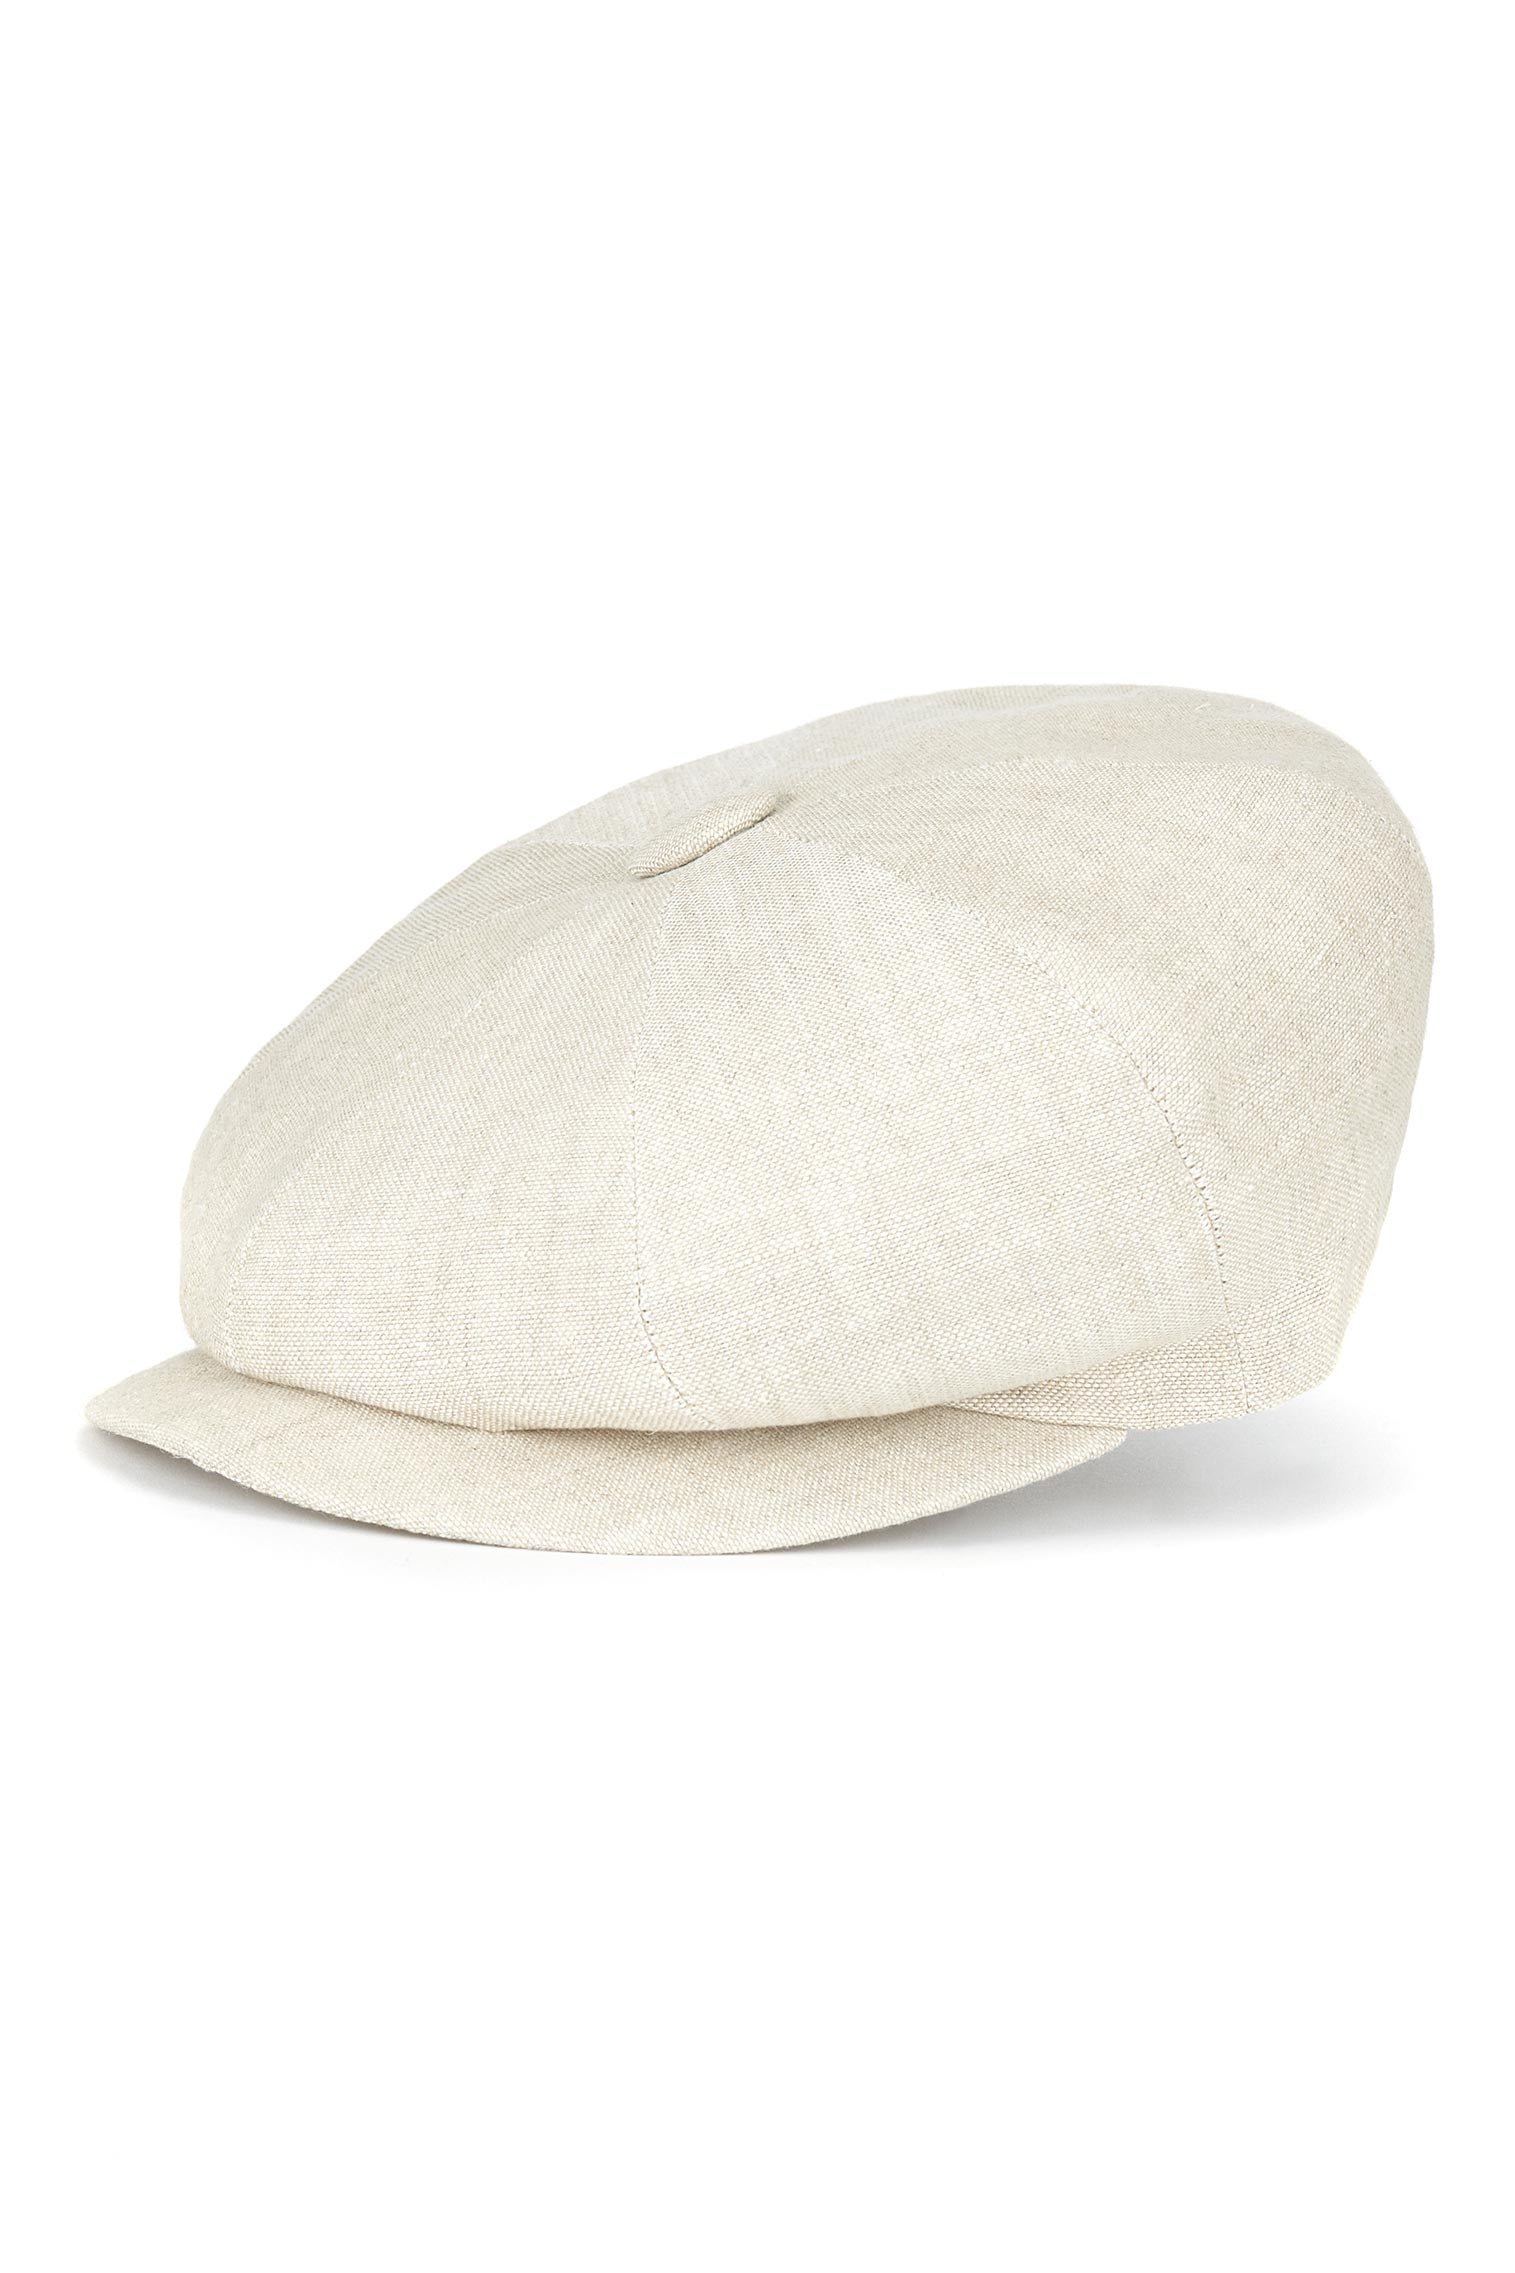 Linen Muirfield Bakerboy Cap - Hats for Oval Face Shapes - Lock & Co. Hatters London UK